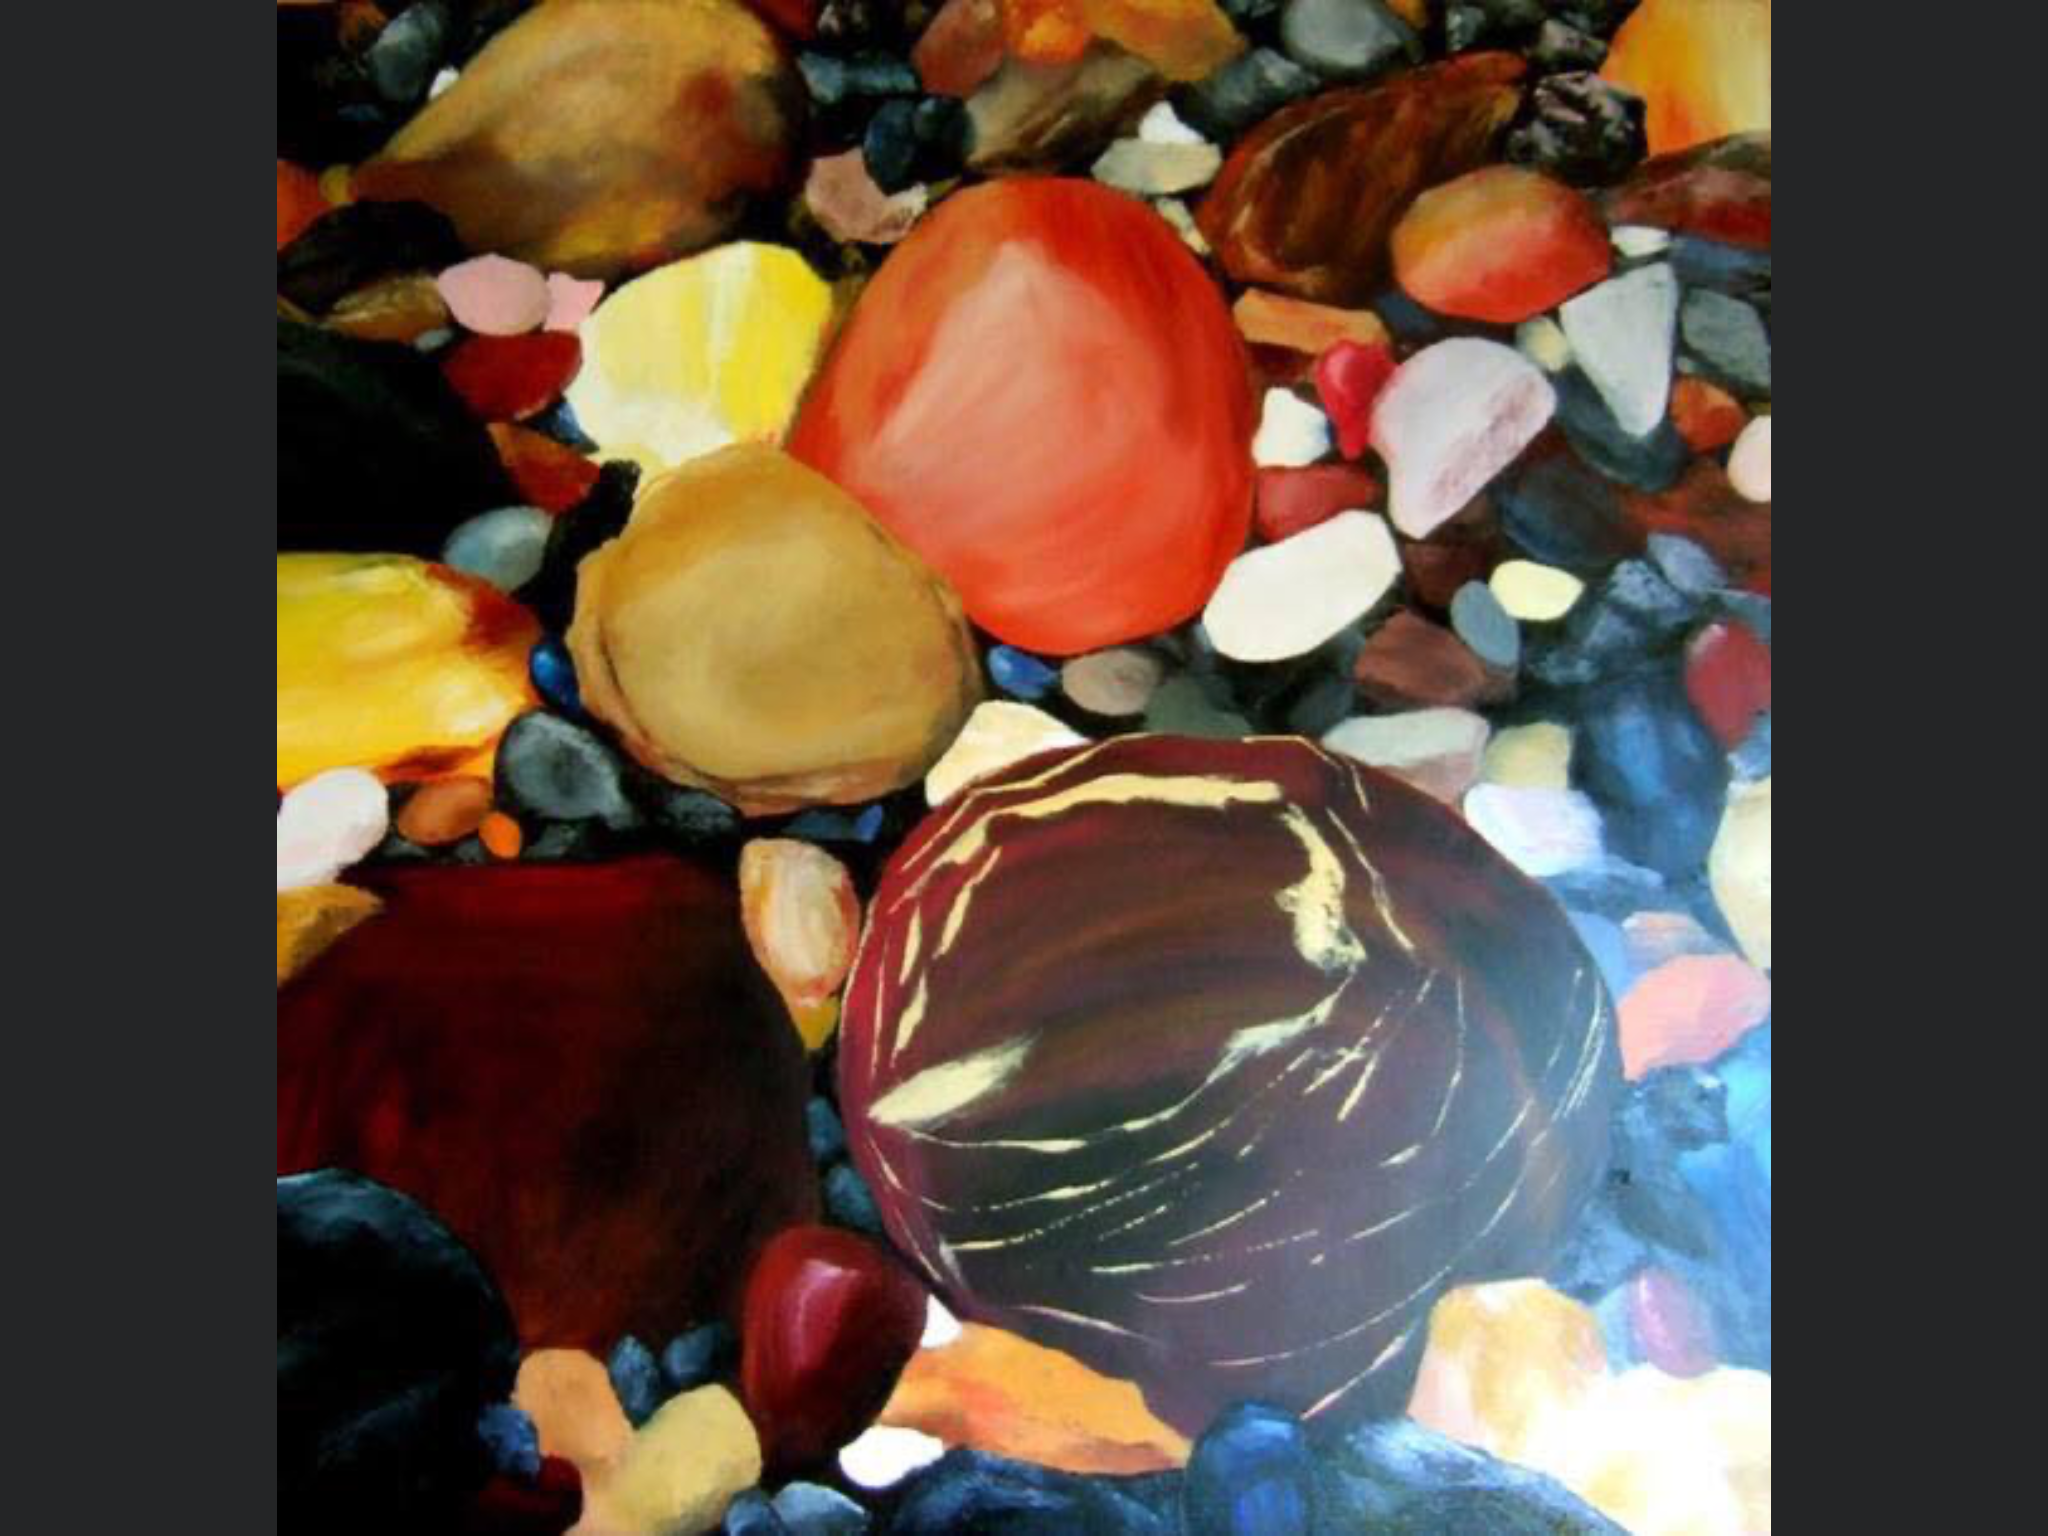 Rock and Pebble oil 2012 by Jennifer Blenkinsopp prolific artist born 17 June 1946